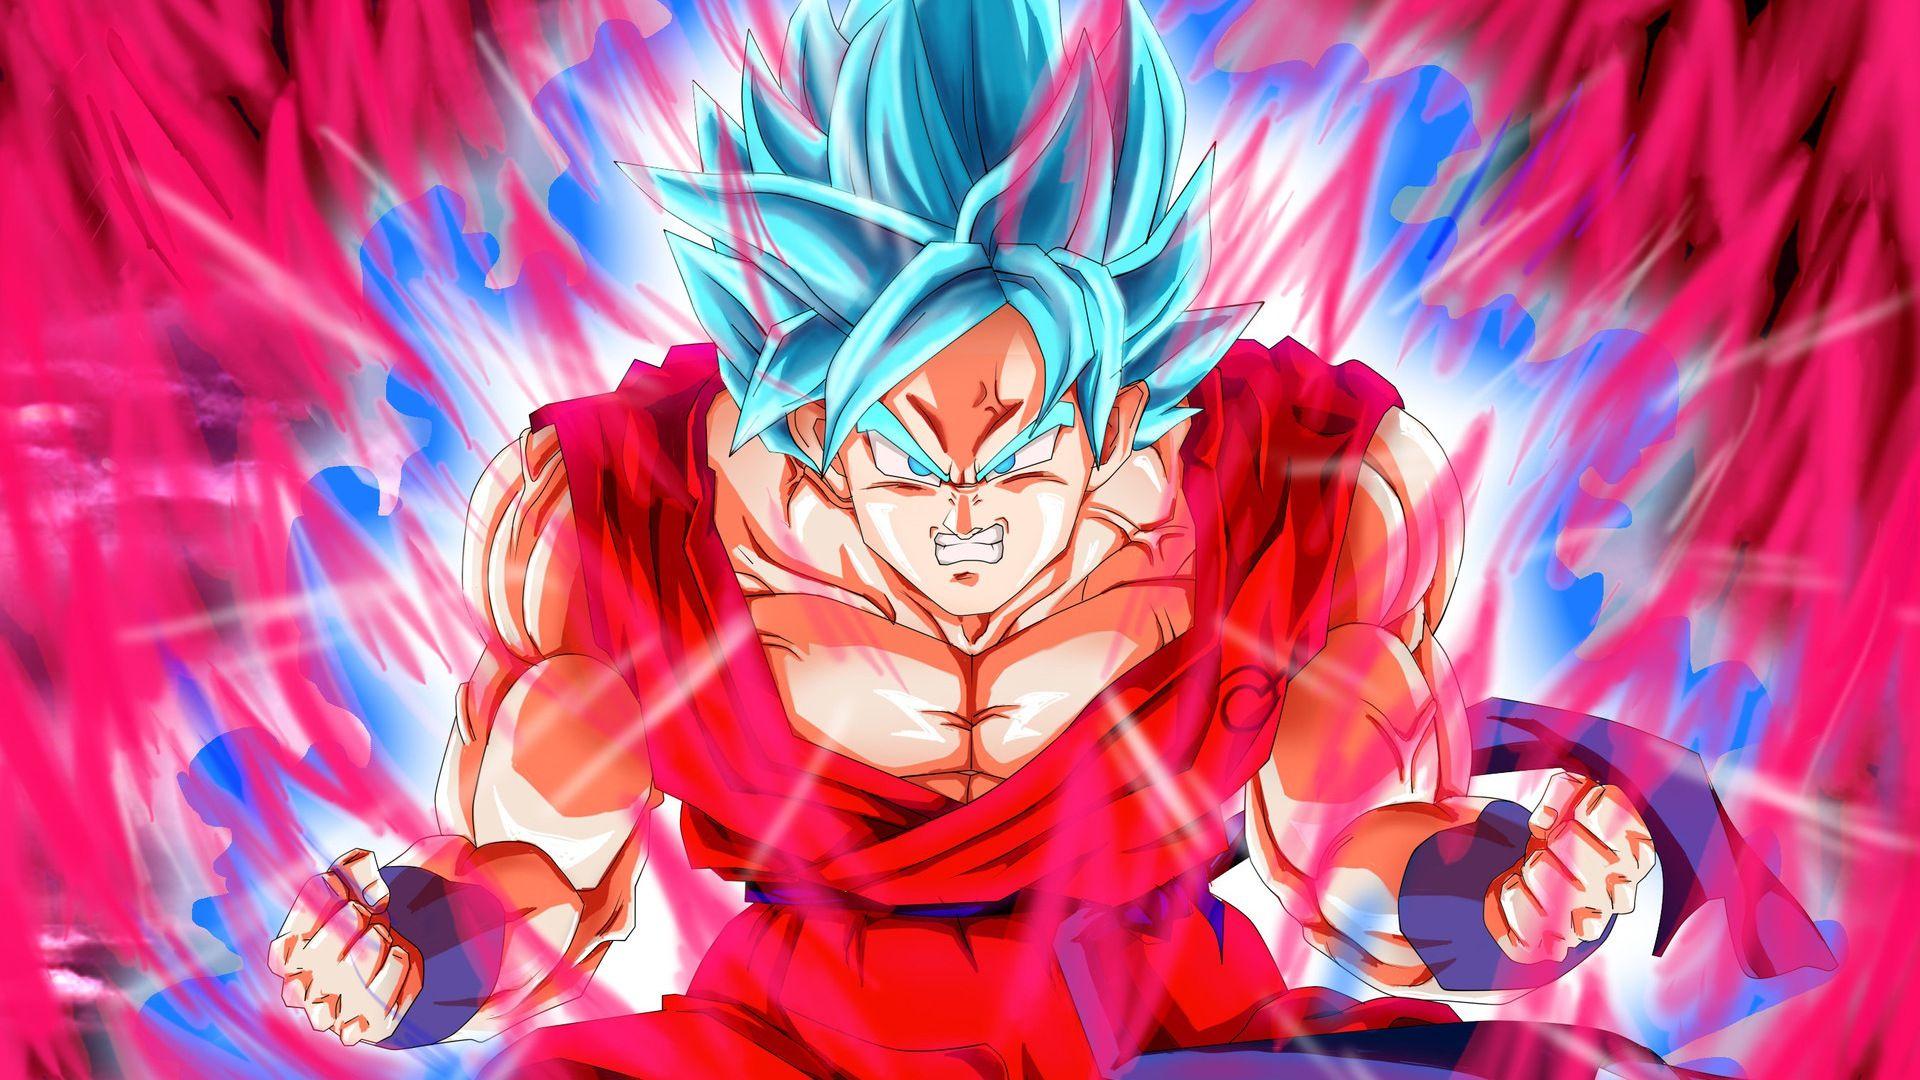 Super Saiyan God Goku - wide 5